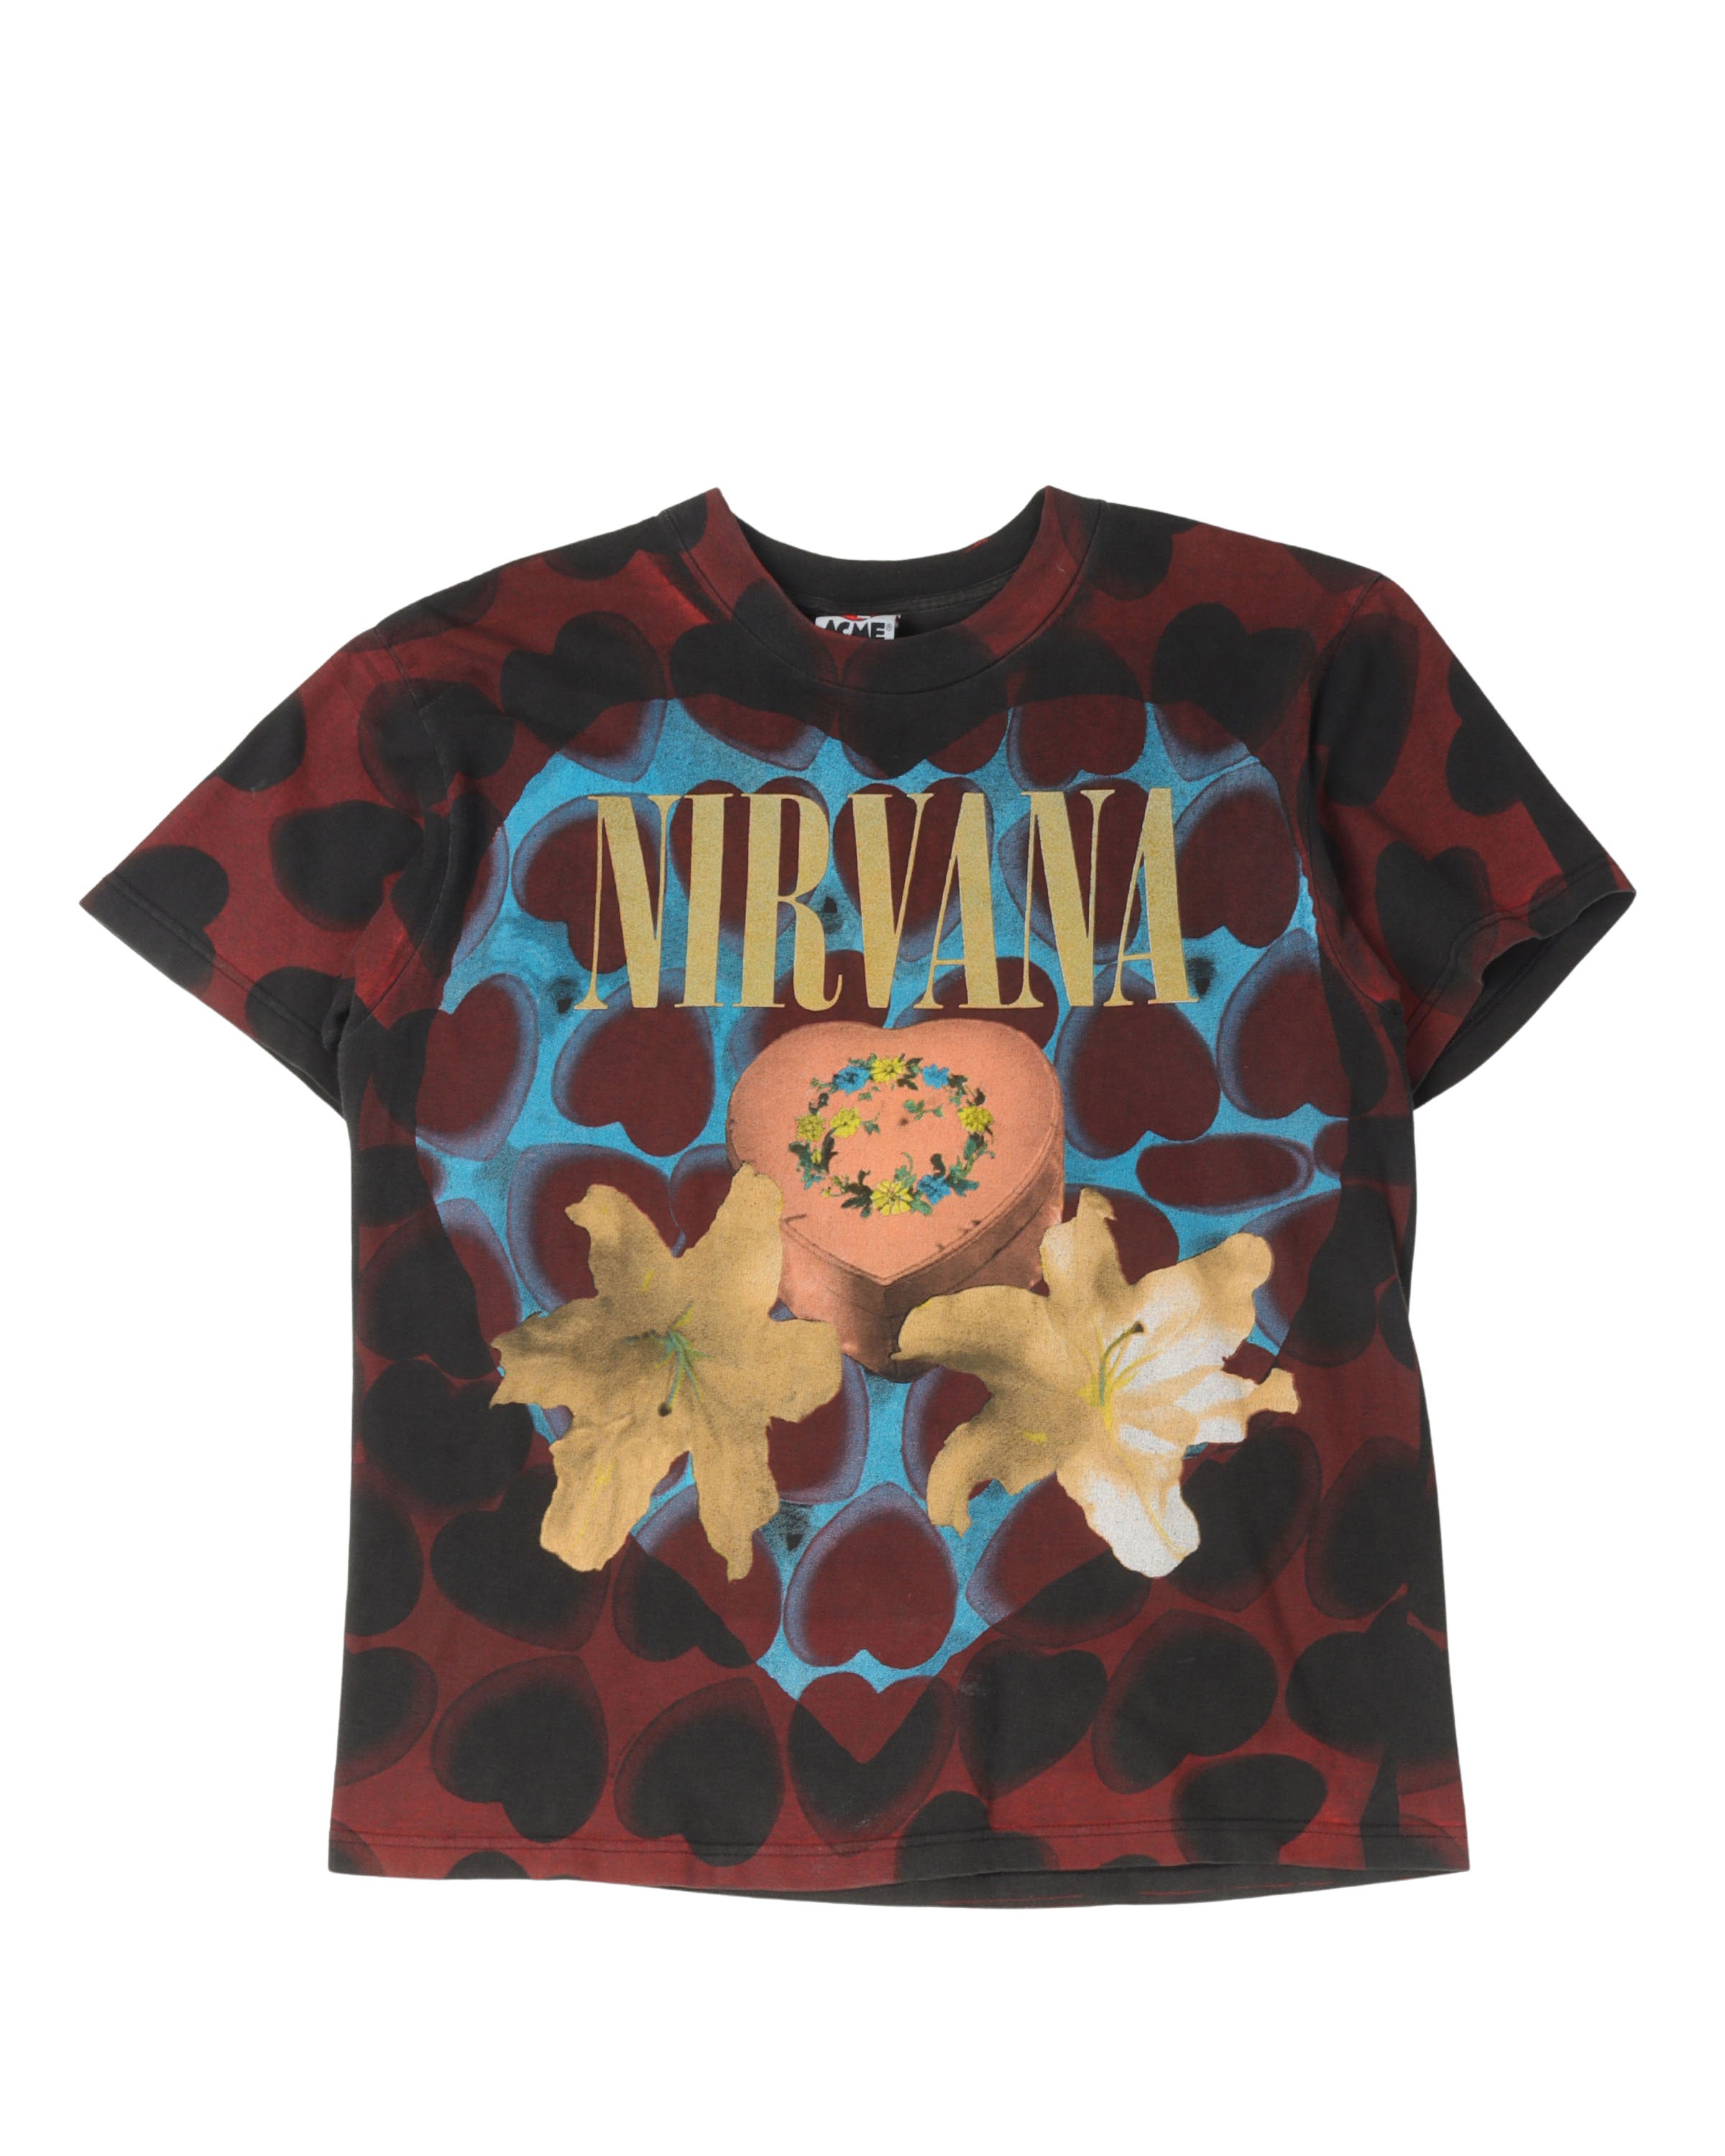 Nirvana "Heart Shaped Box" T-Shirt